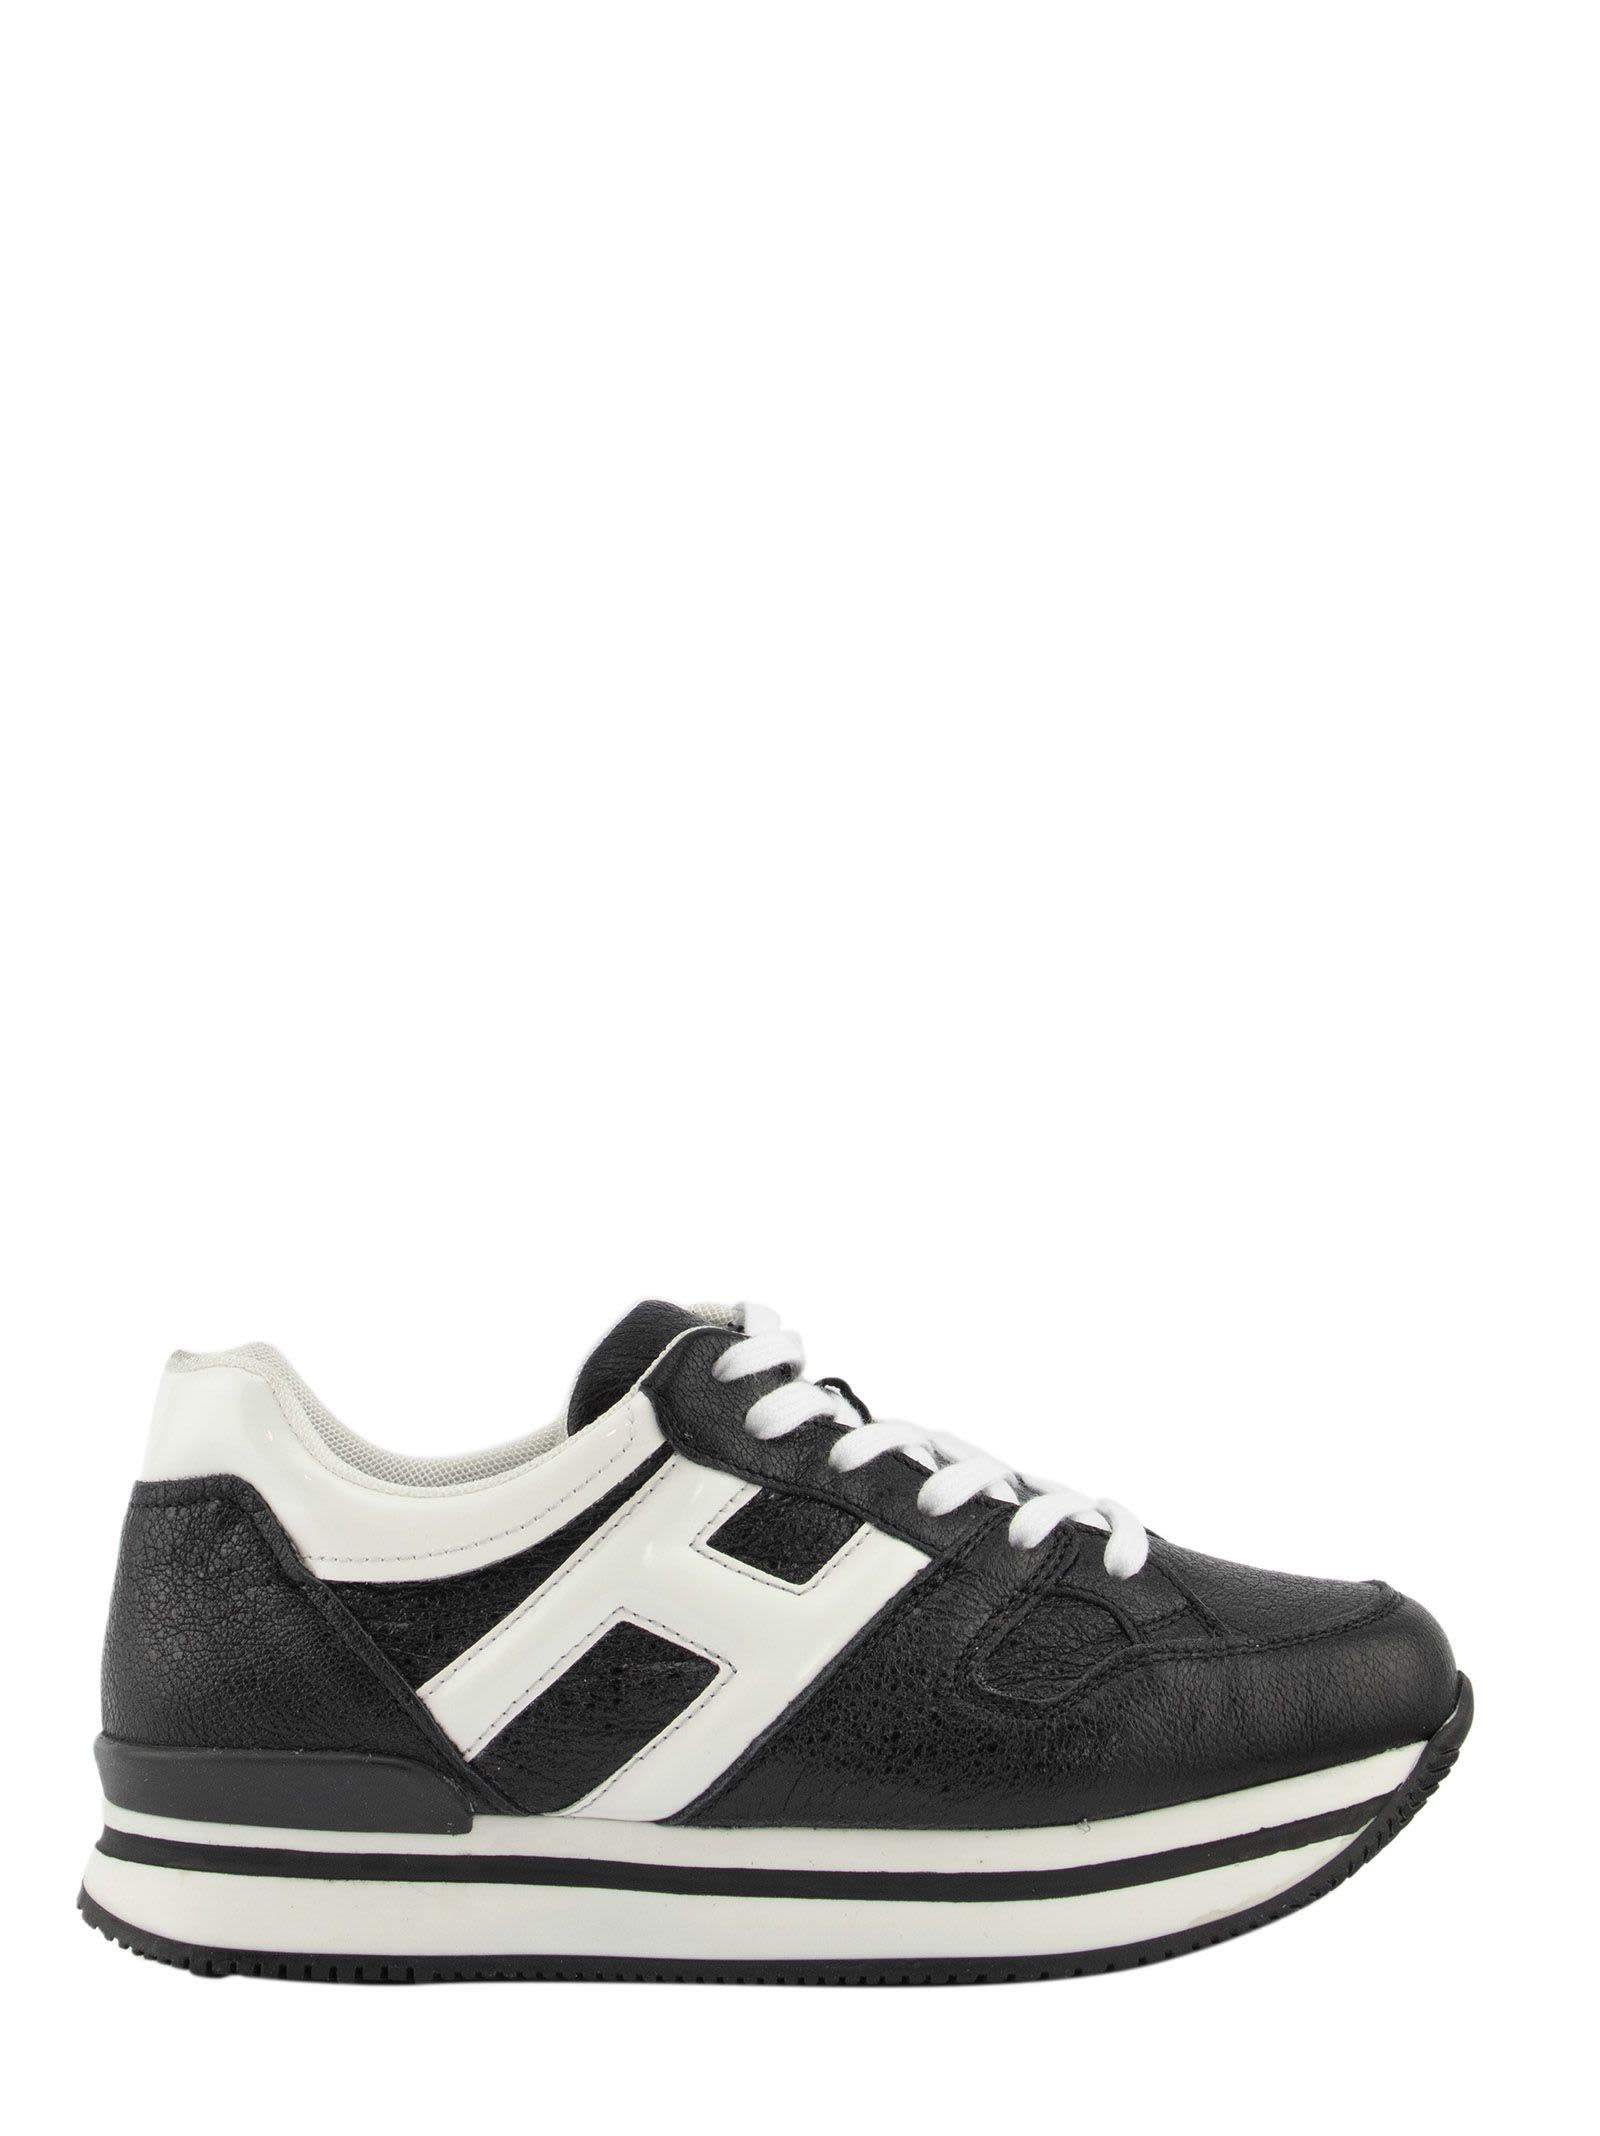 Hogan Sneakers - H222 White, Black